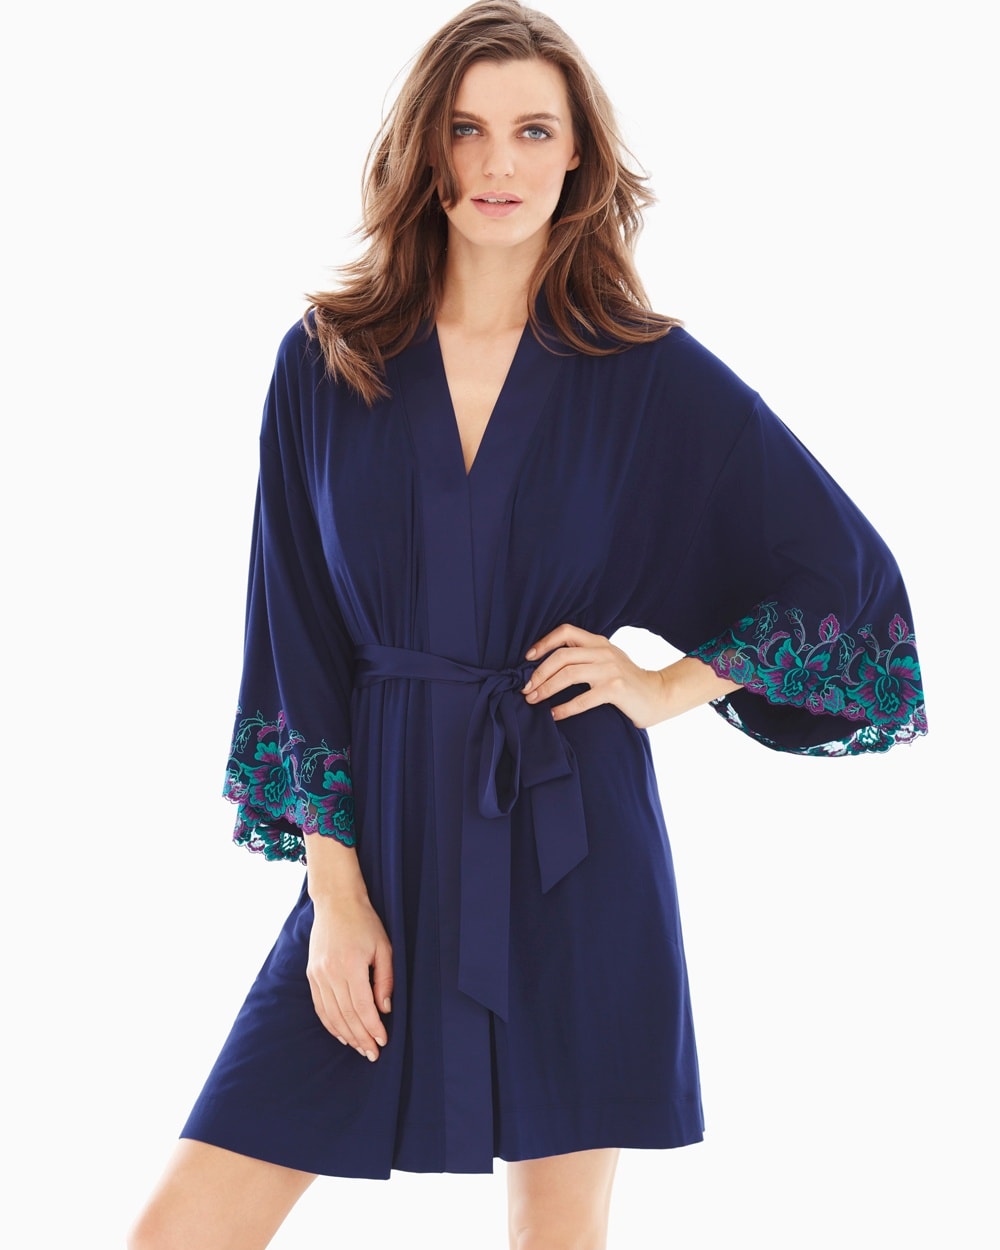 Limited Edition Sensuous Lace Floral Short Robe Navy/Rainforest